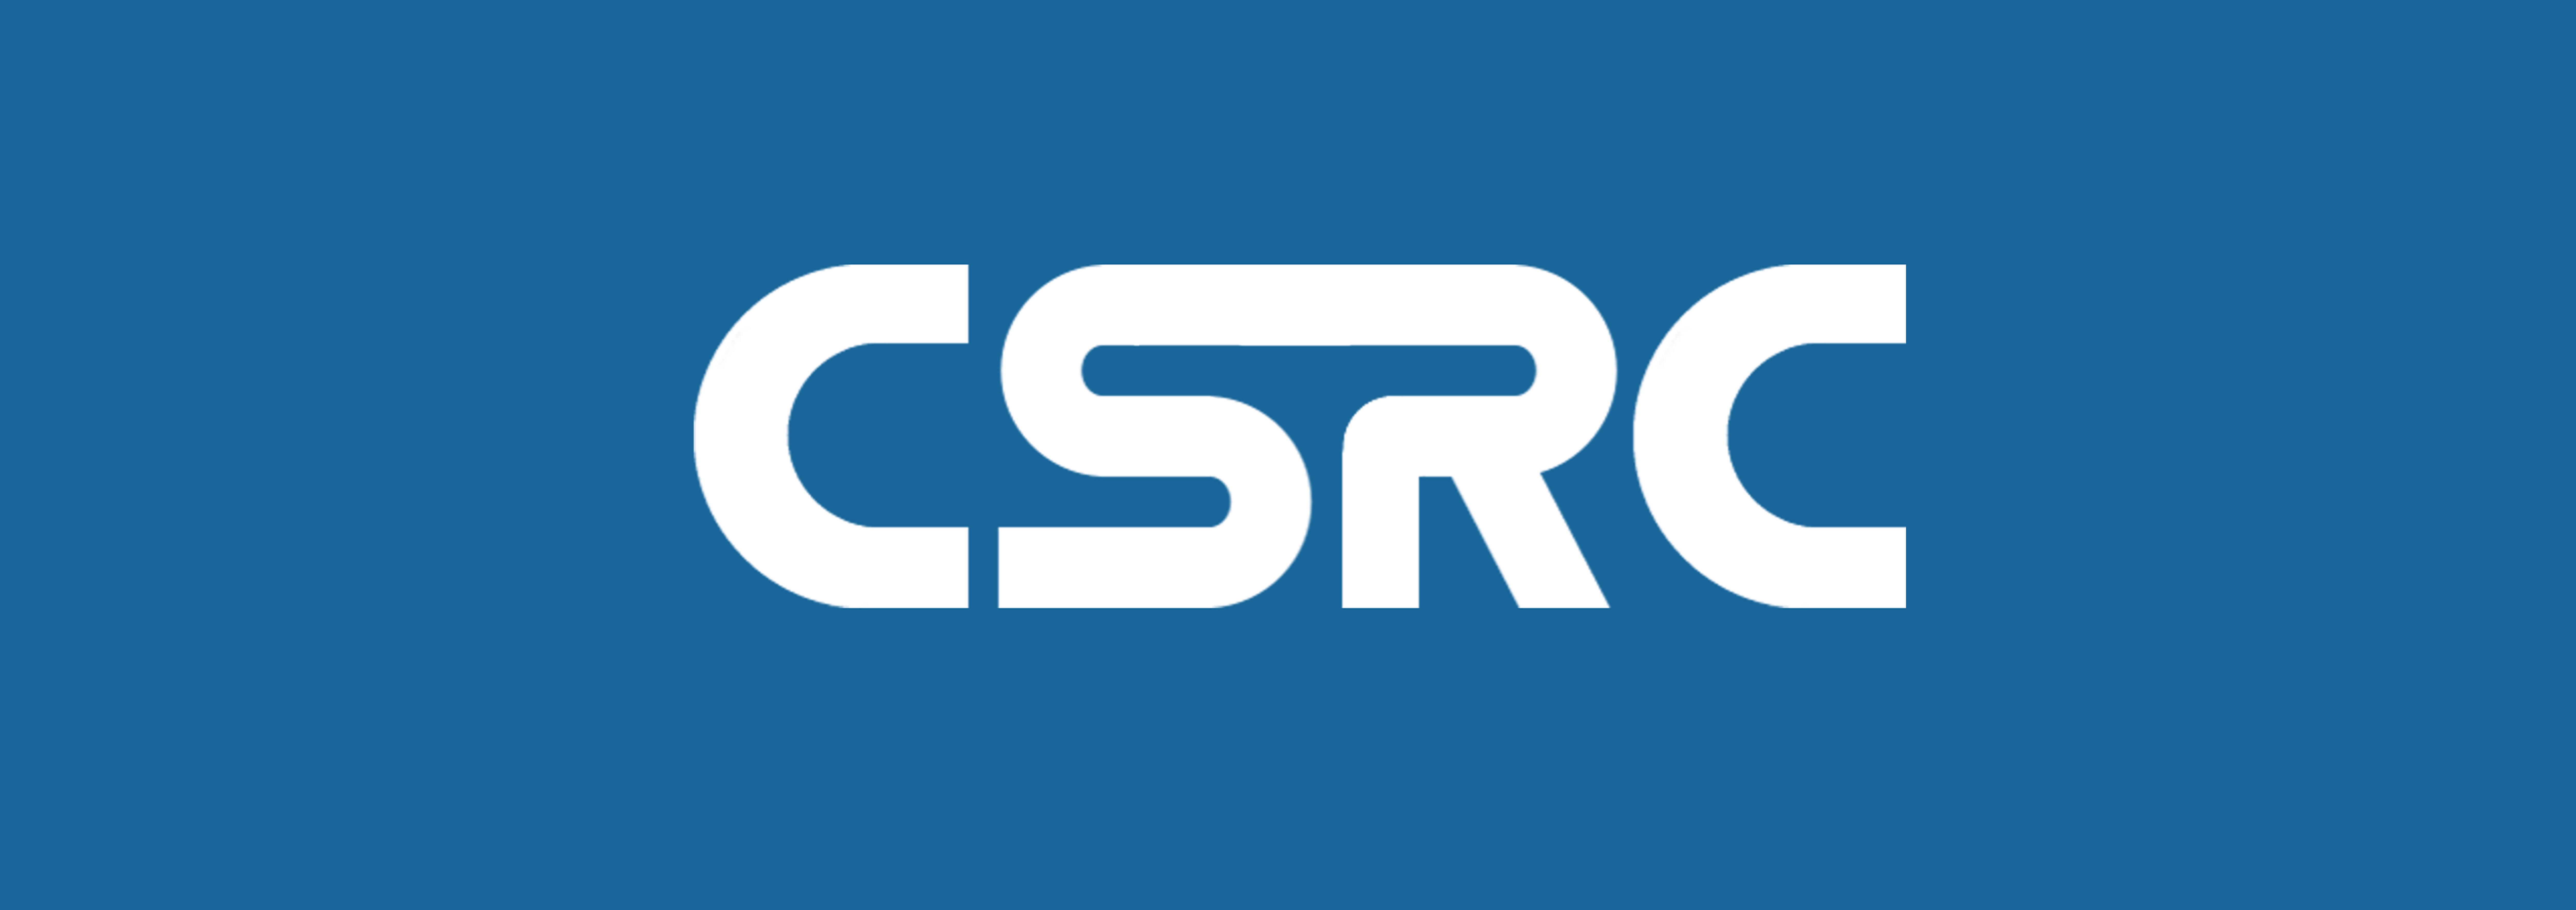 Computer Security Resource Center logo